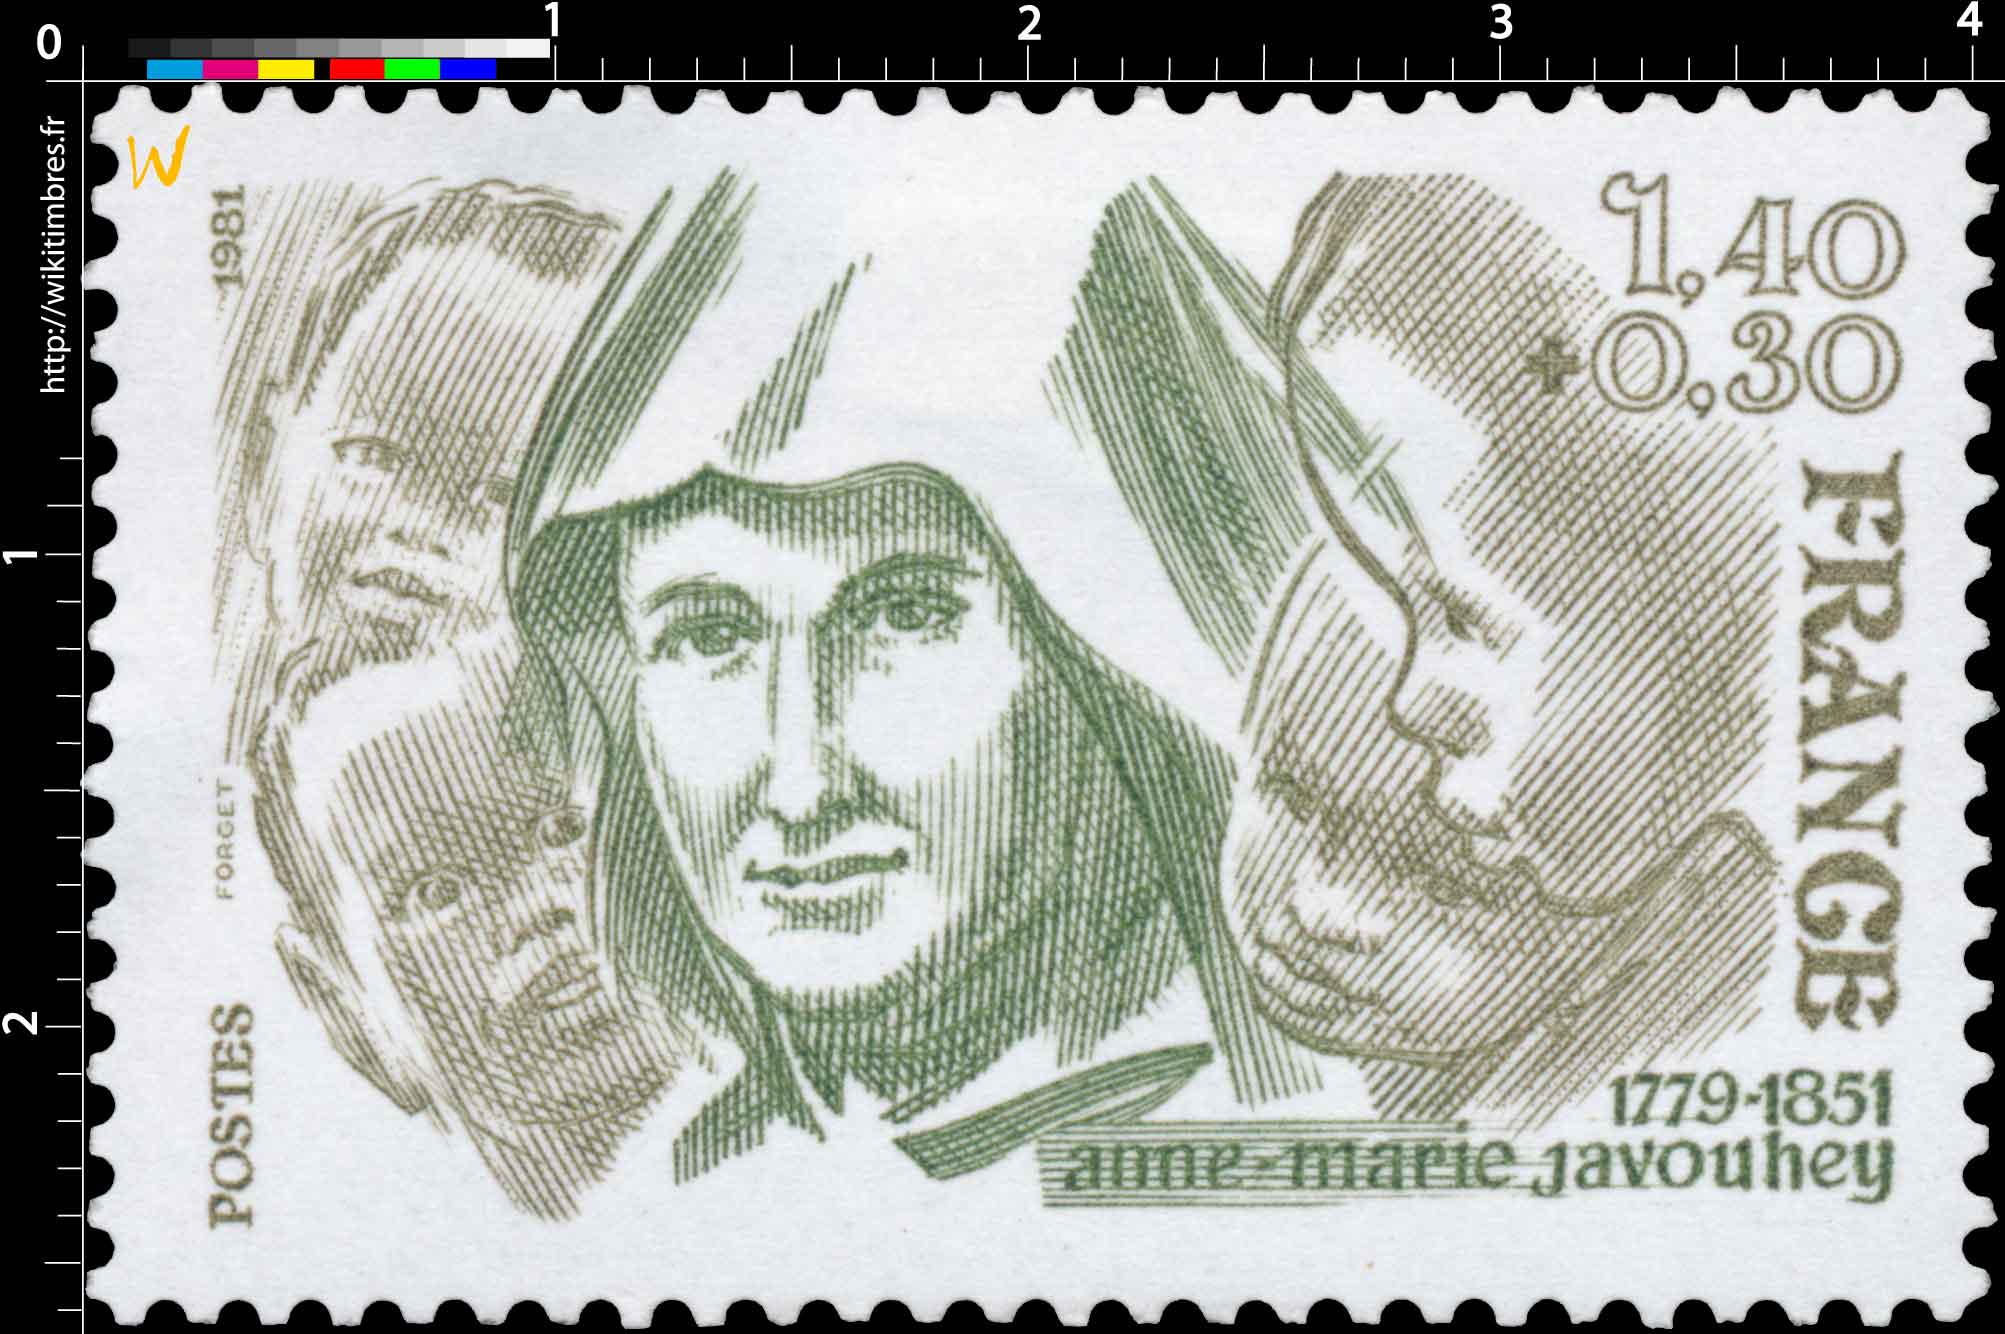 1981 Anne-Marie Javouhey 1779-1851